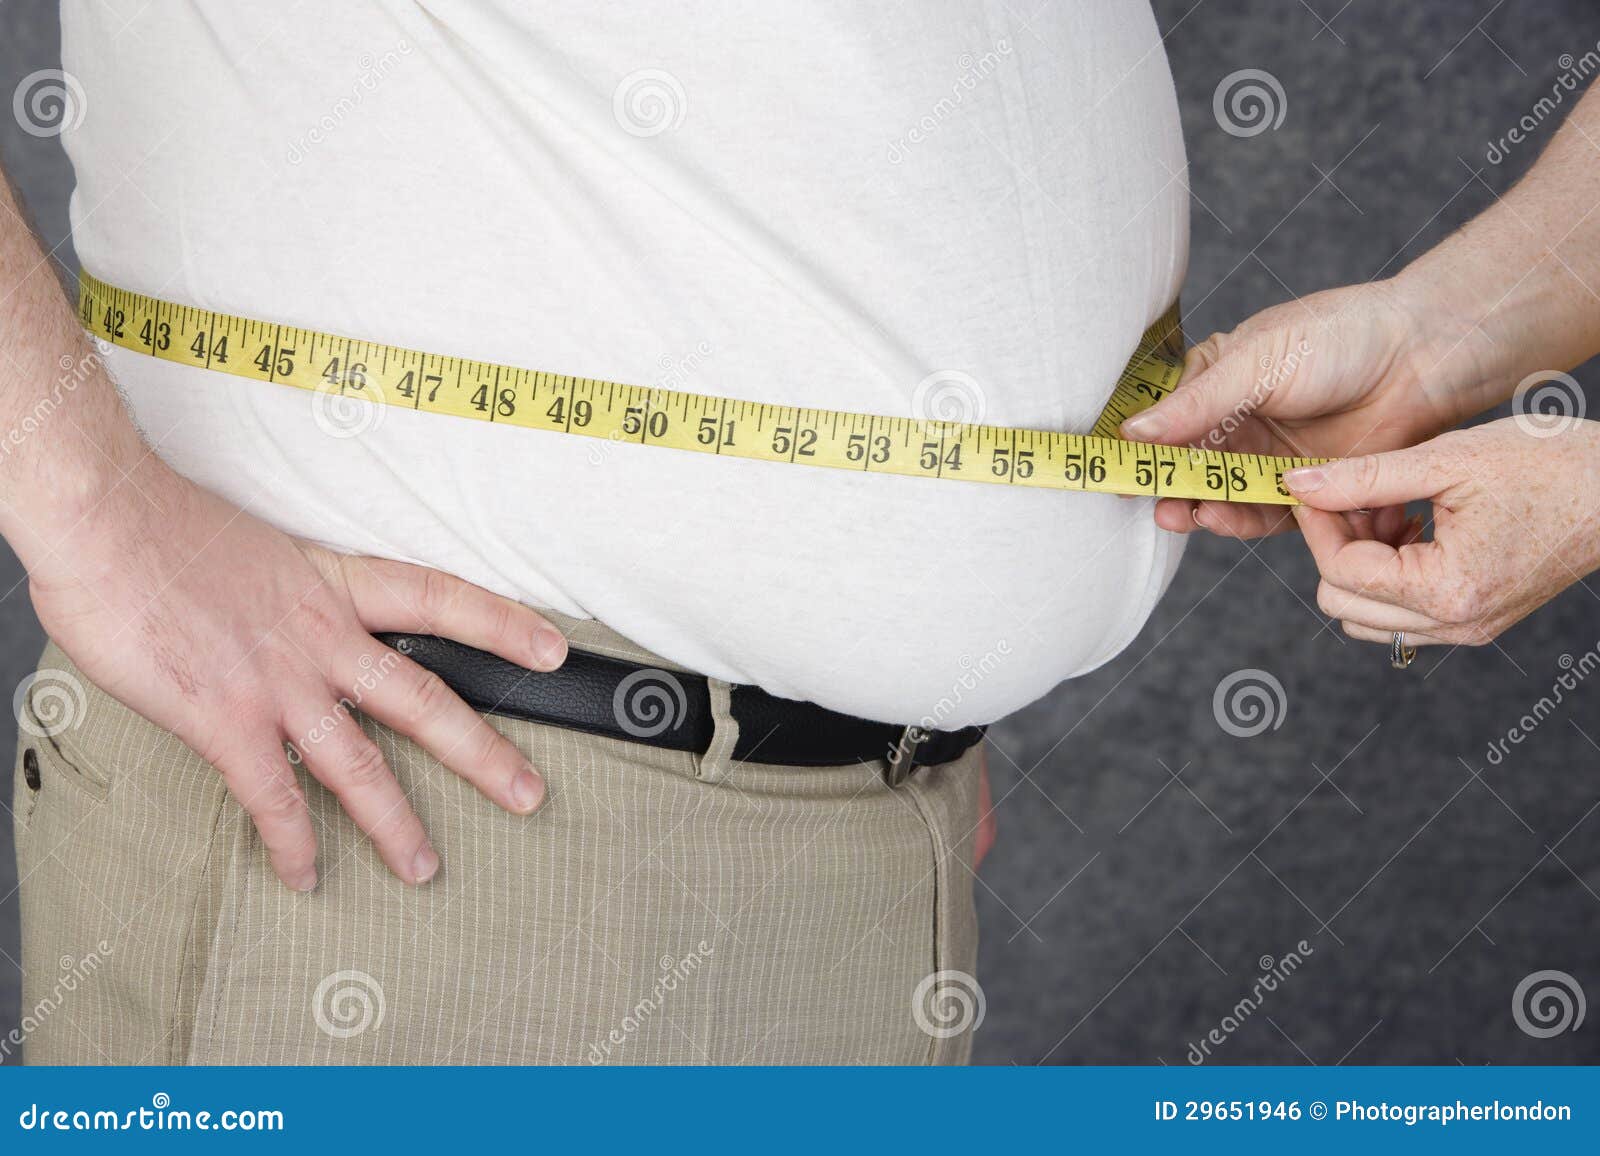 hands measuring abdomen of obese man